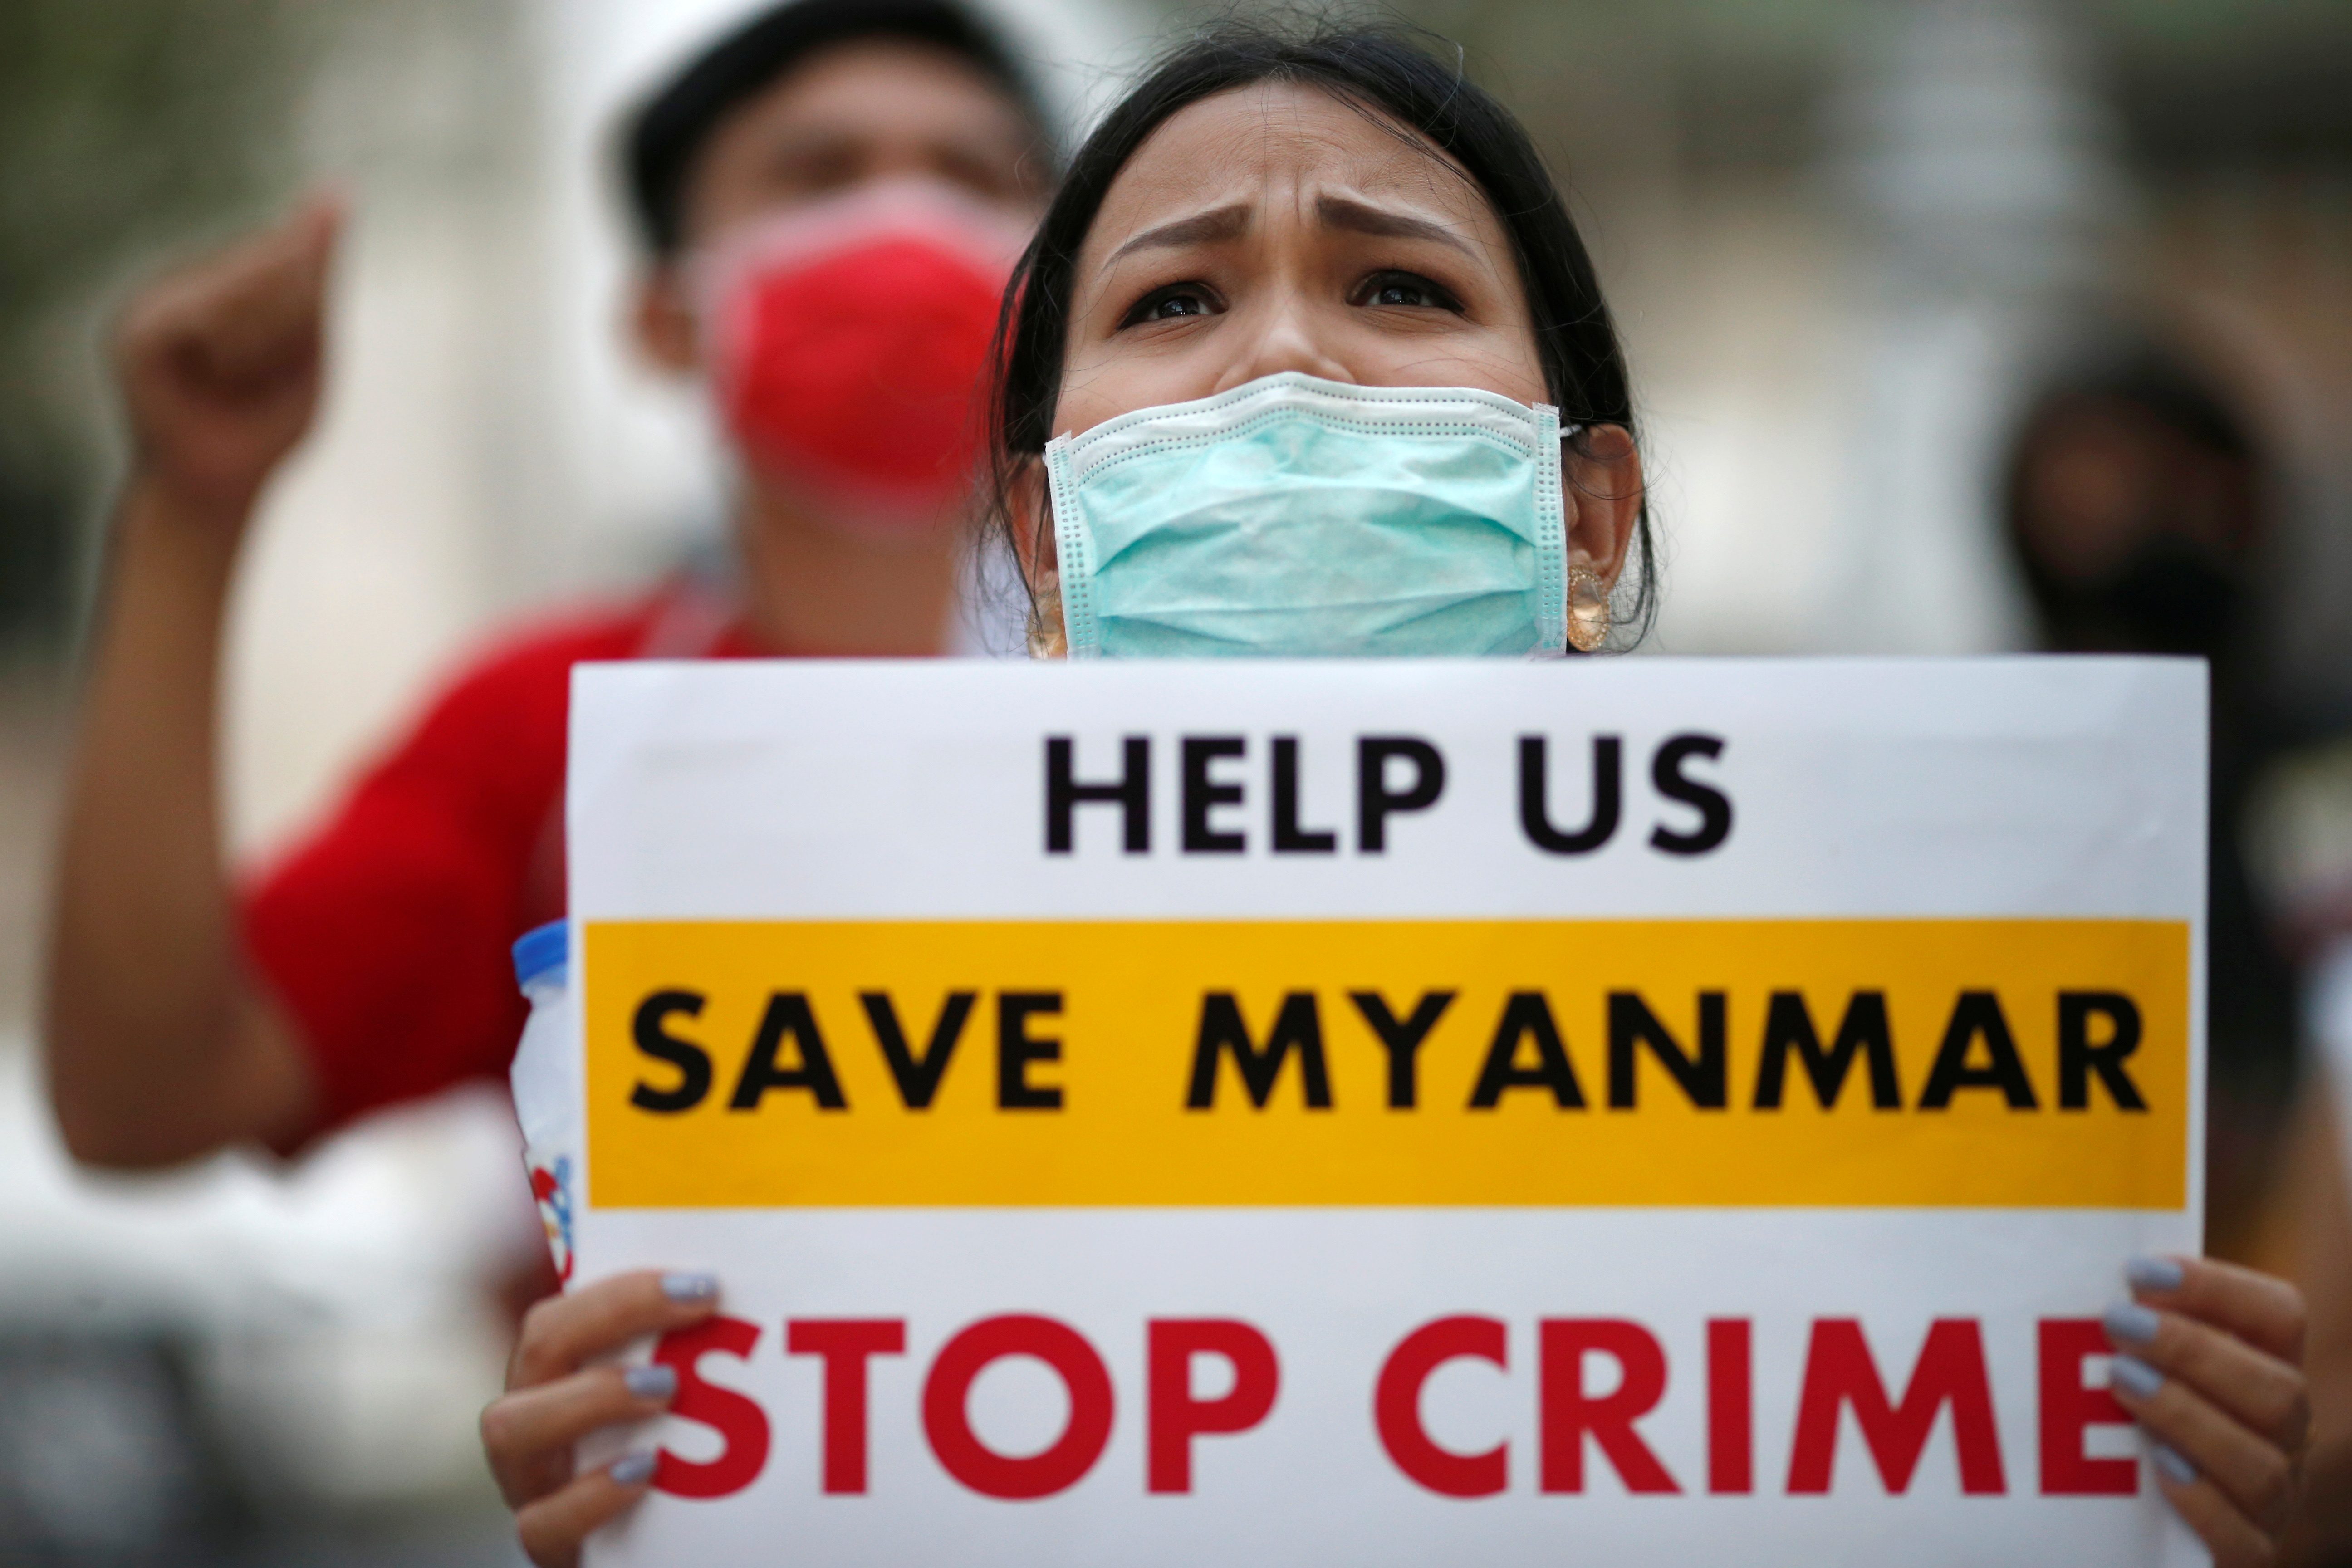 Japan, US, India, Australia call for return of democracy in Myanmar